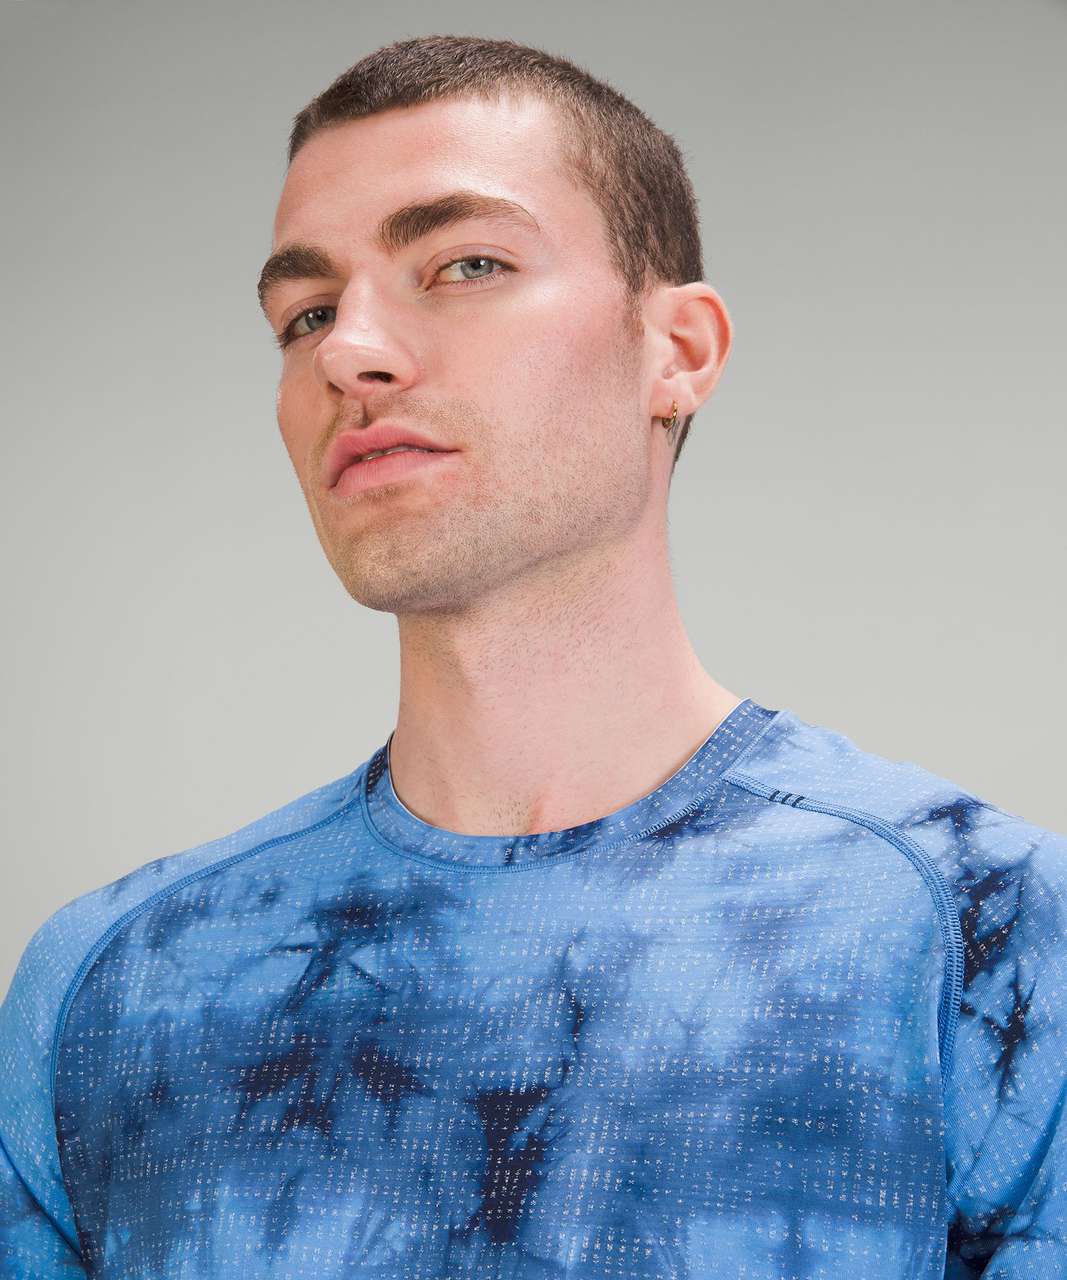 Lululemon Metal Vent Tech Long Sleeve Shirt 2.0 - Disconnect Marble Dye Blue Nile / True Navy